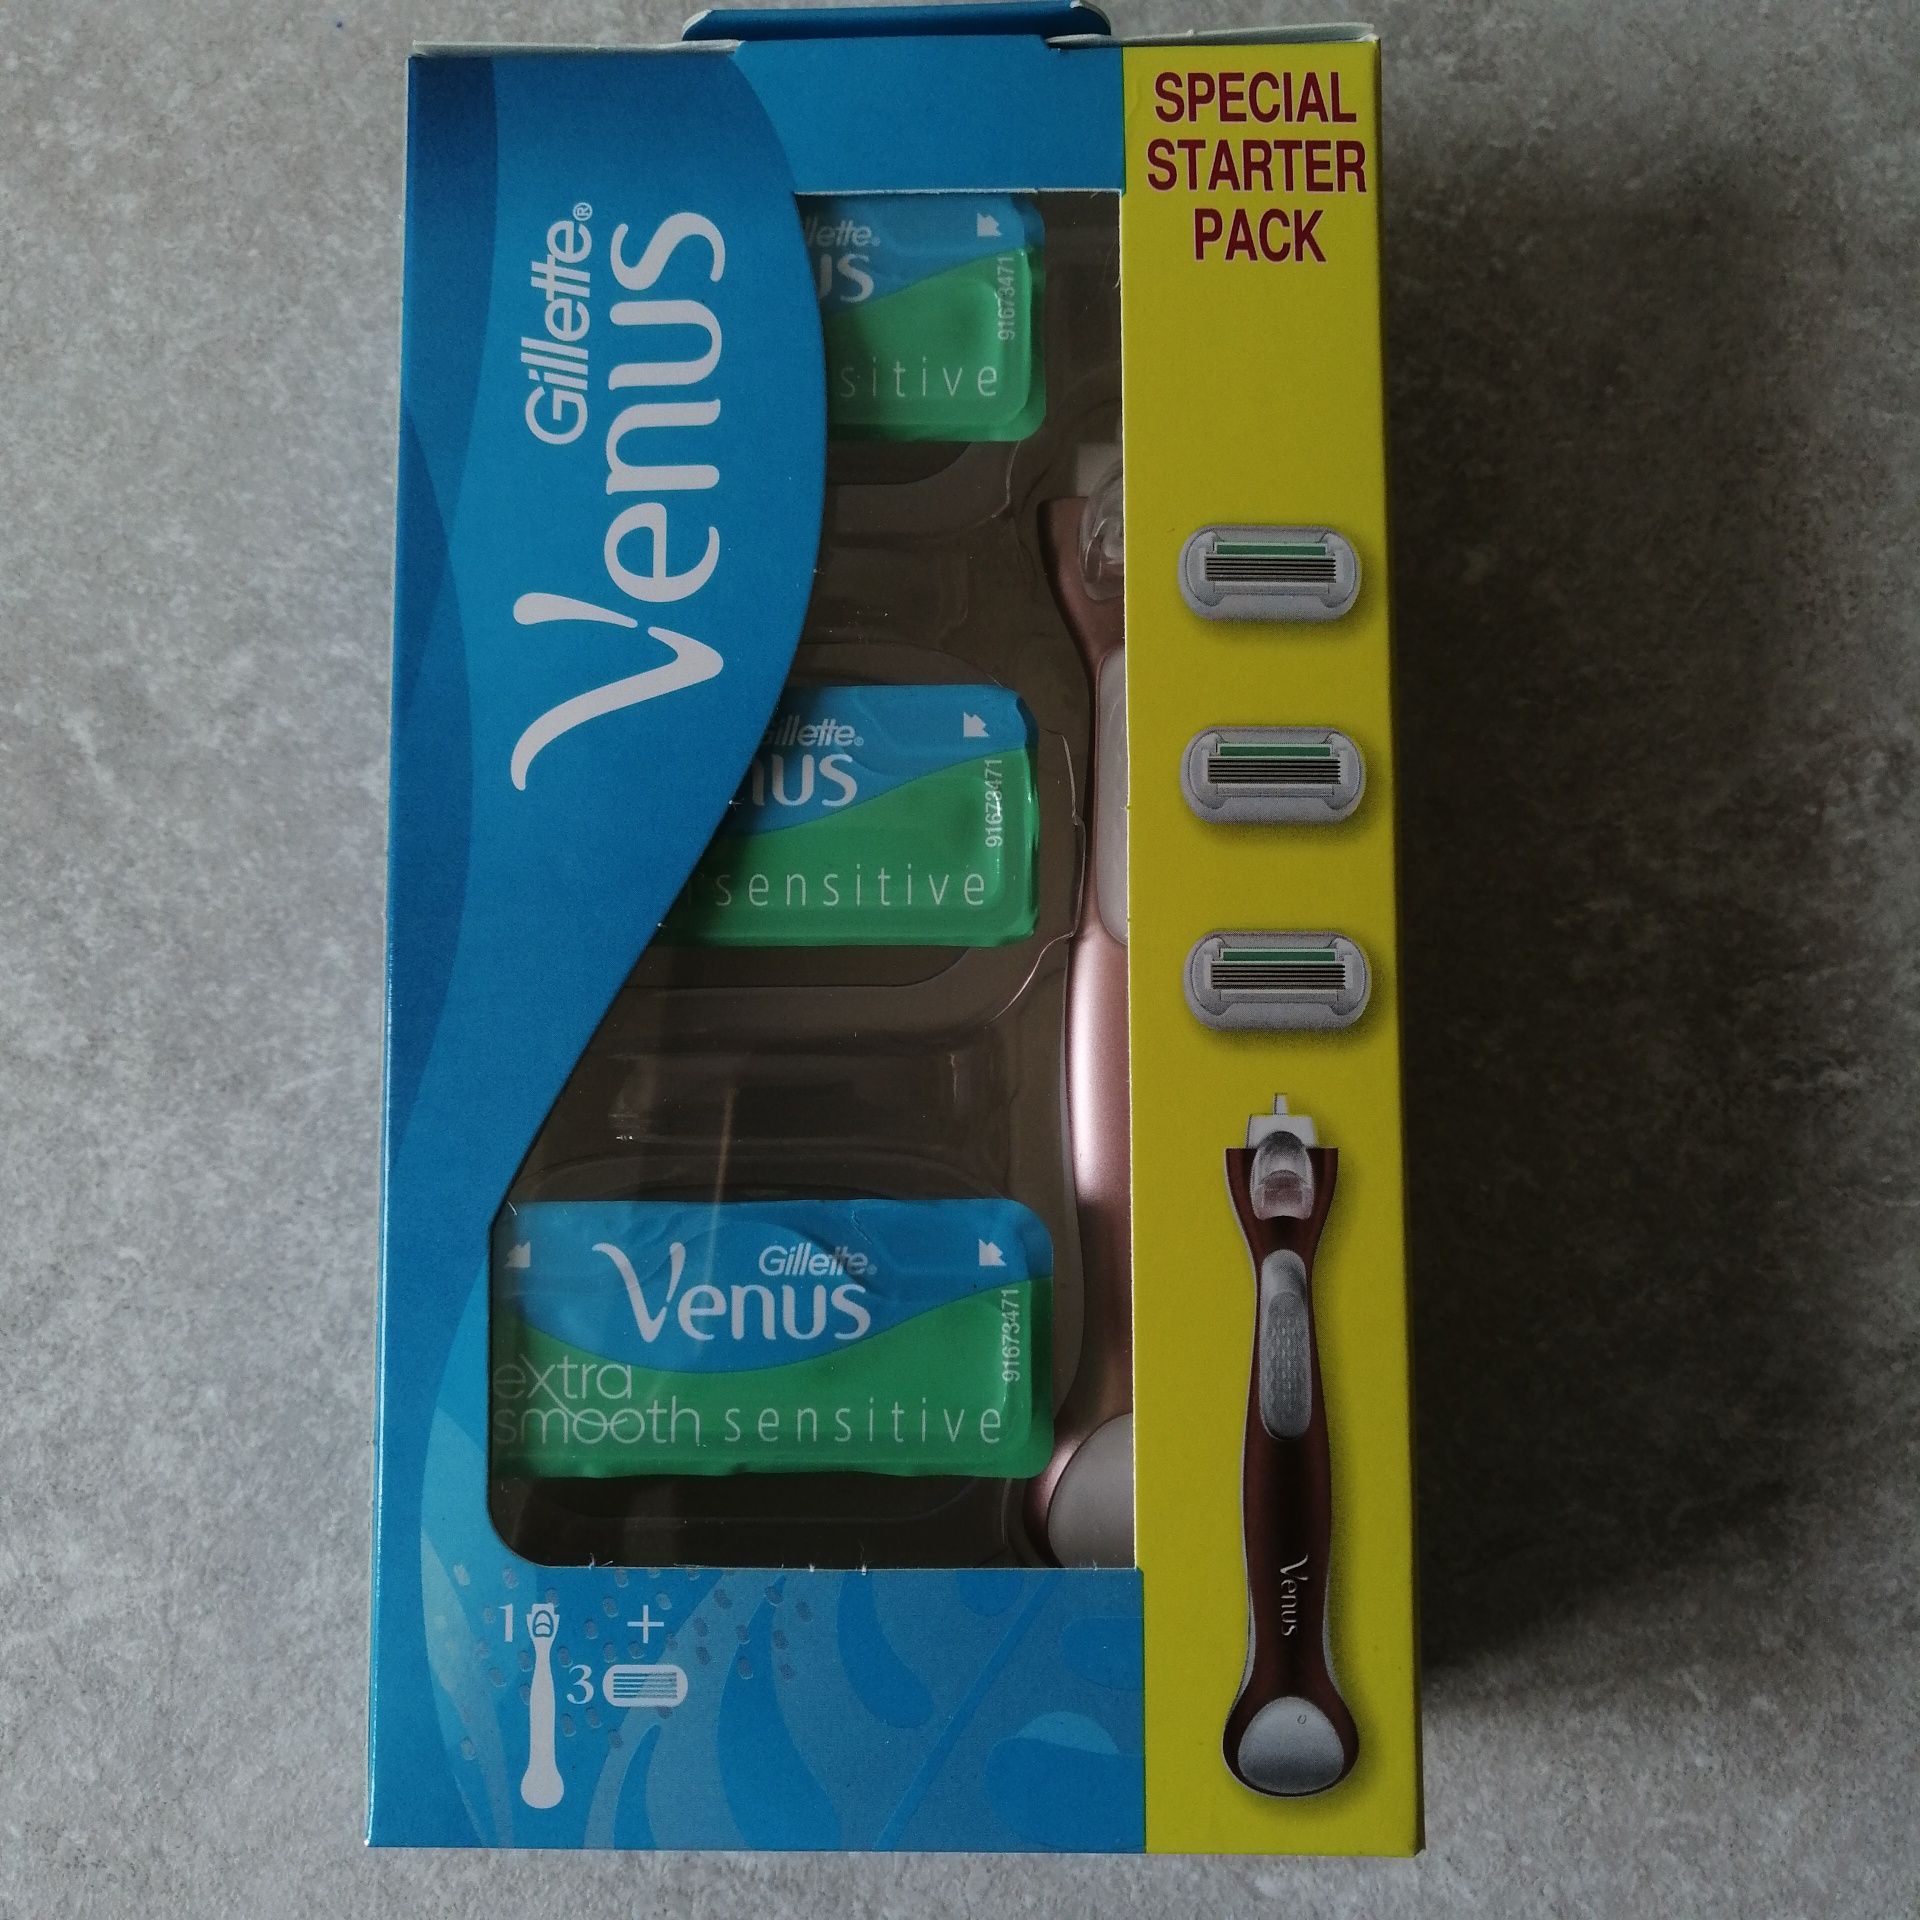 Gillette Venus Extra Smooth Sensitive zestaw